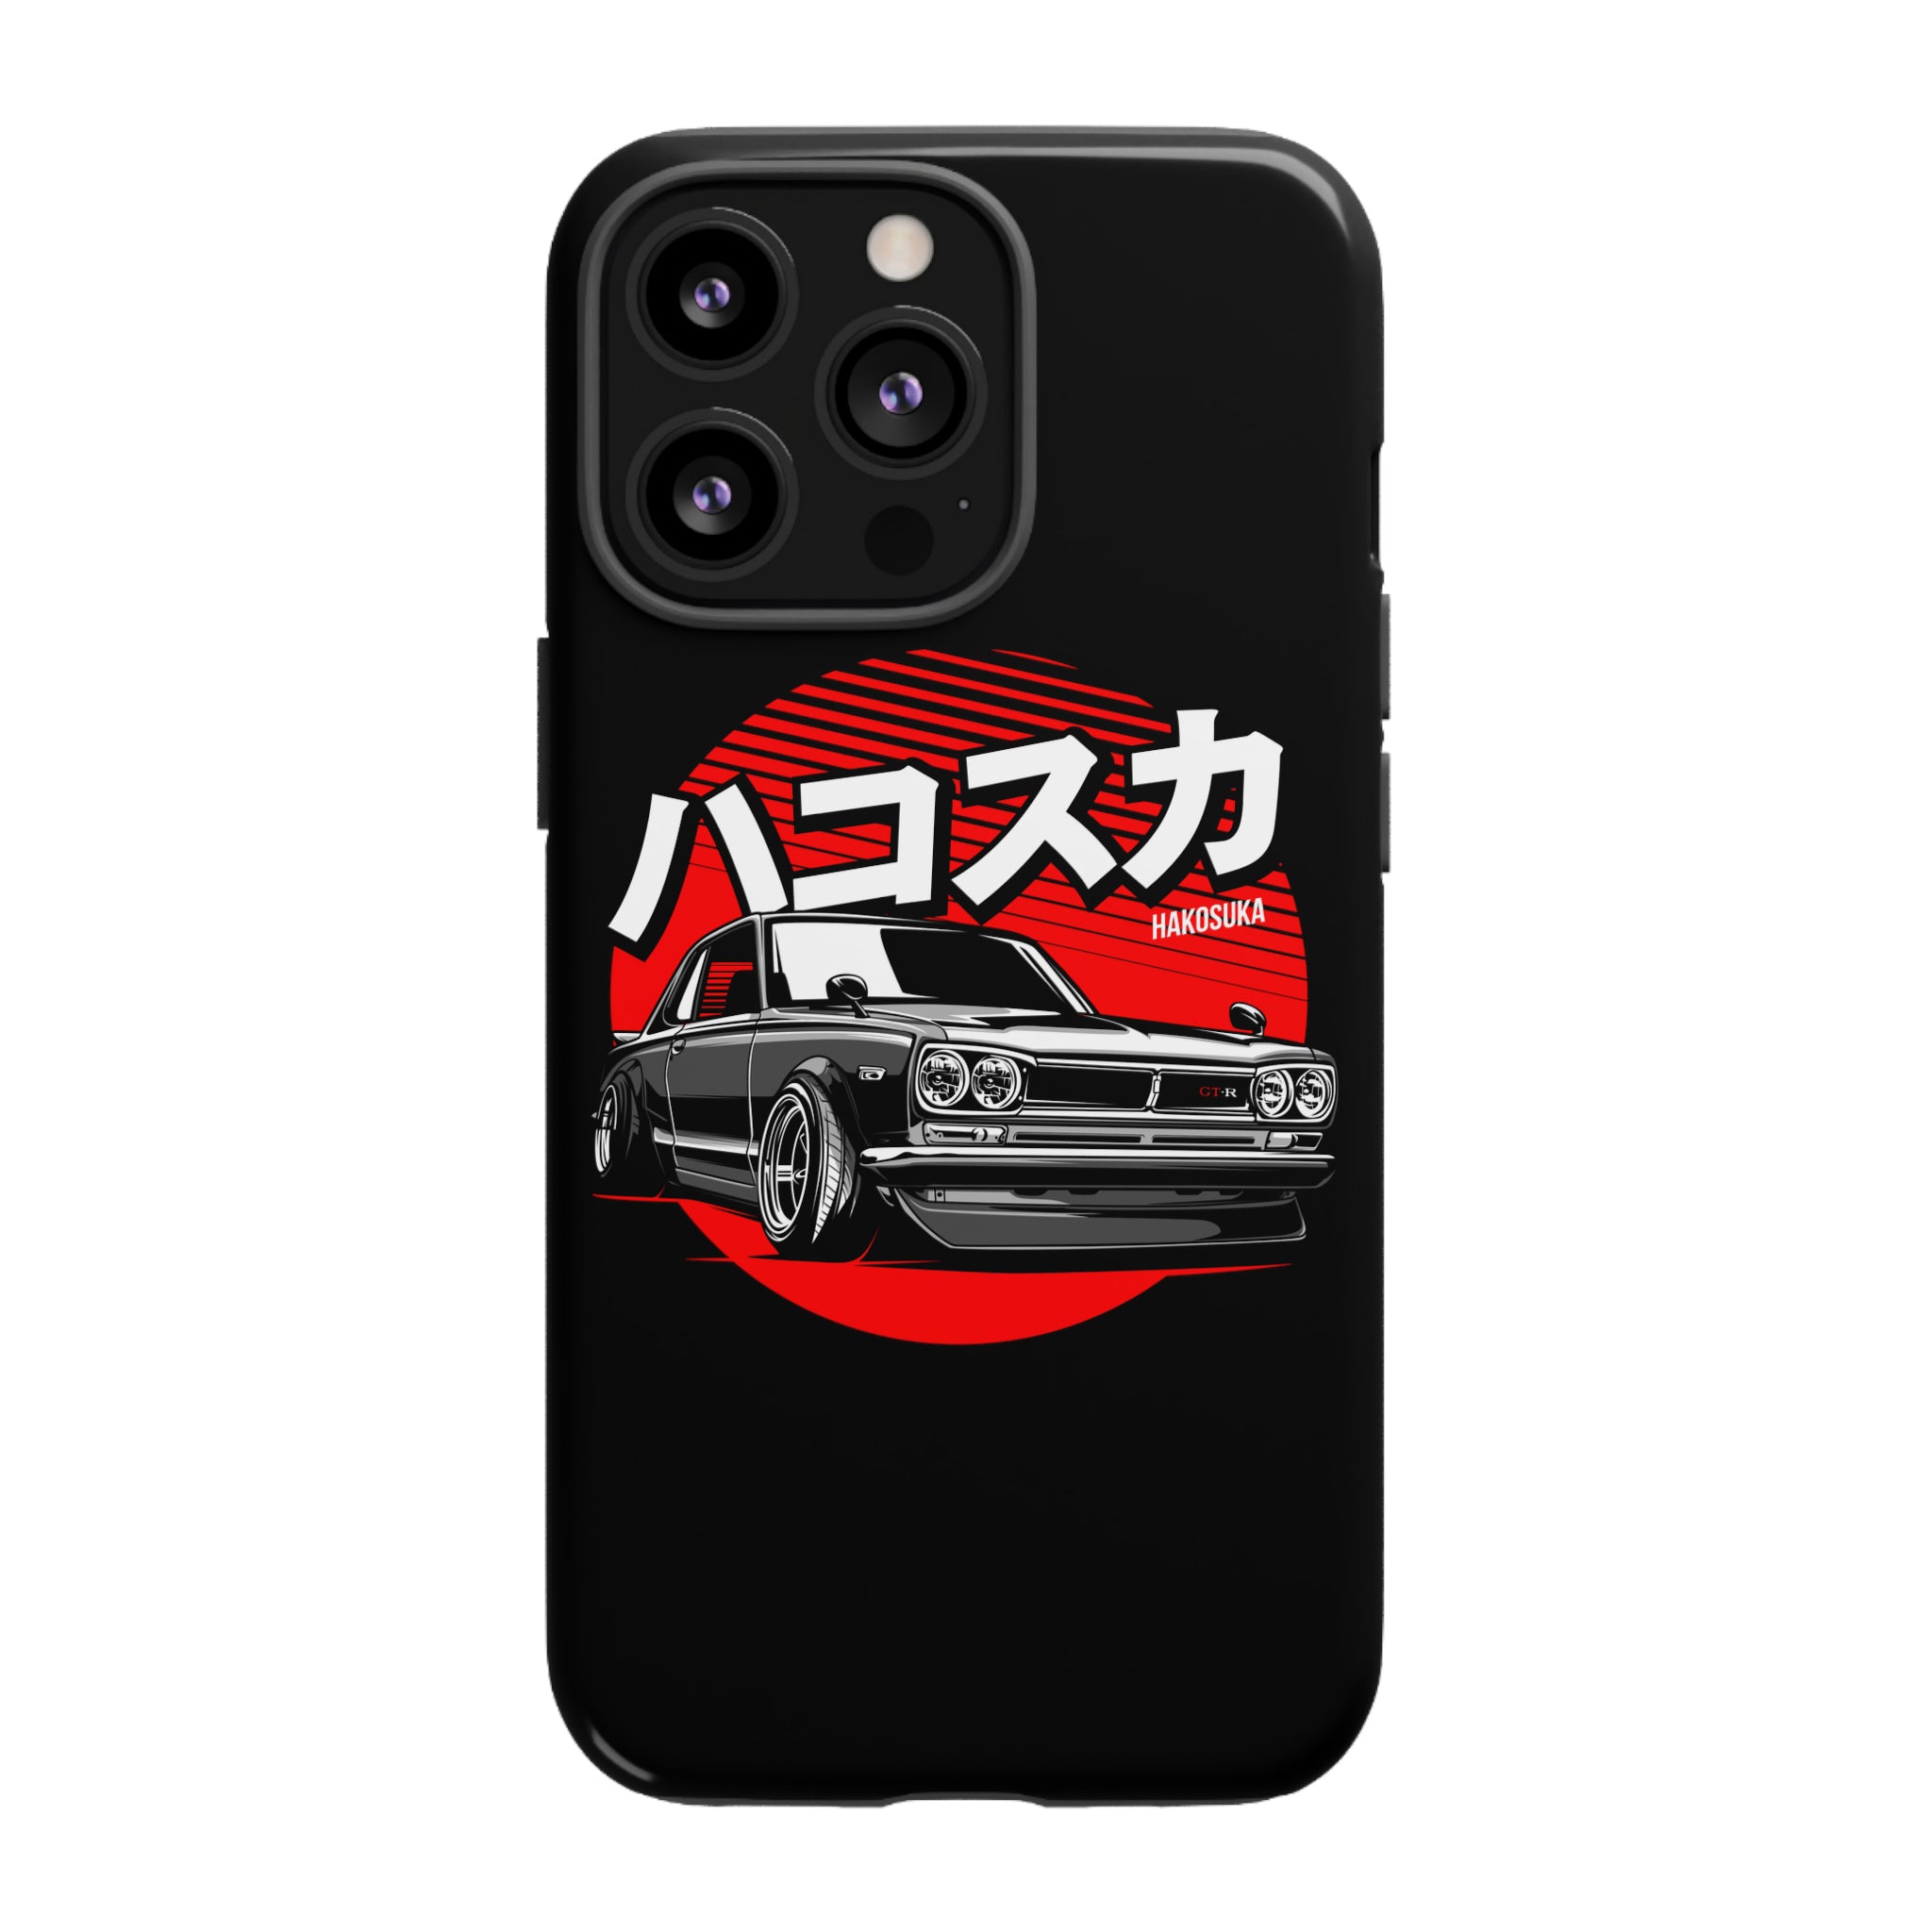 Skyline GTR Hakosuka - Phone Case